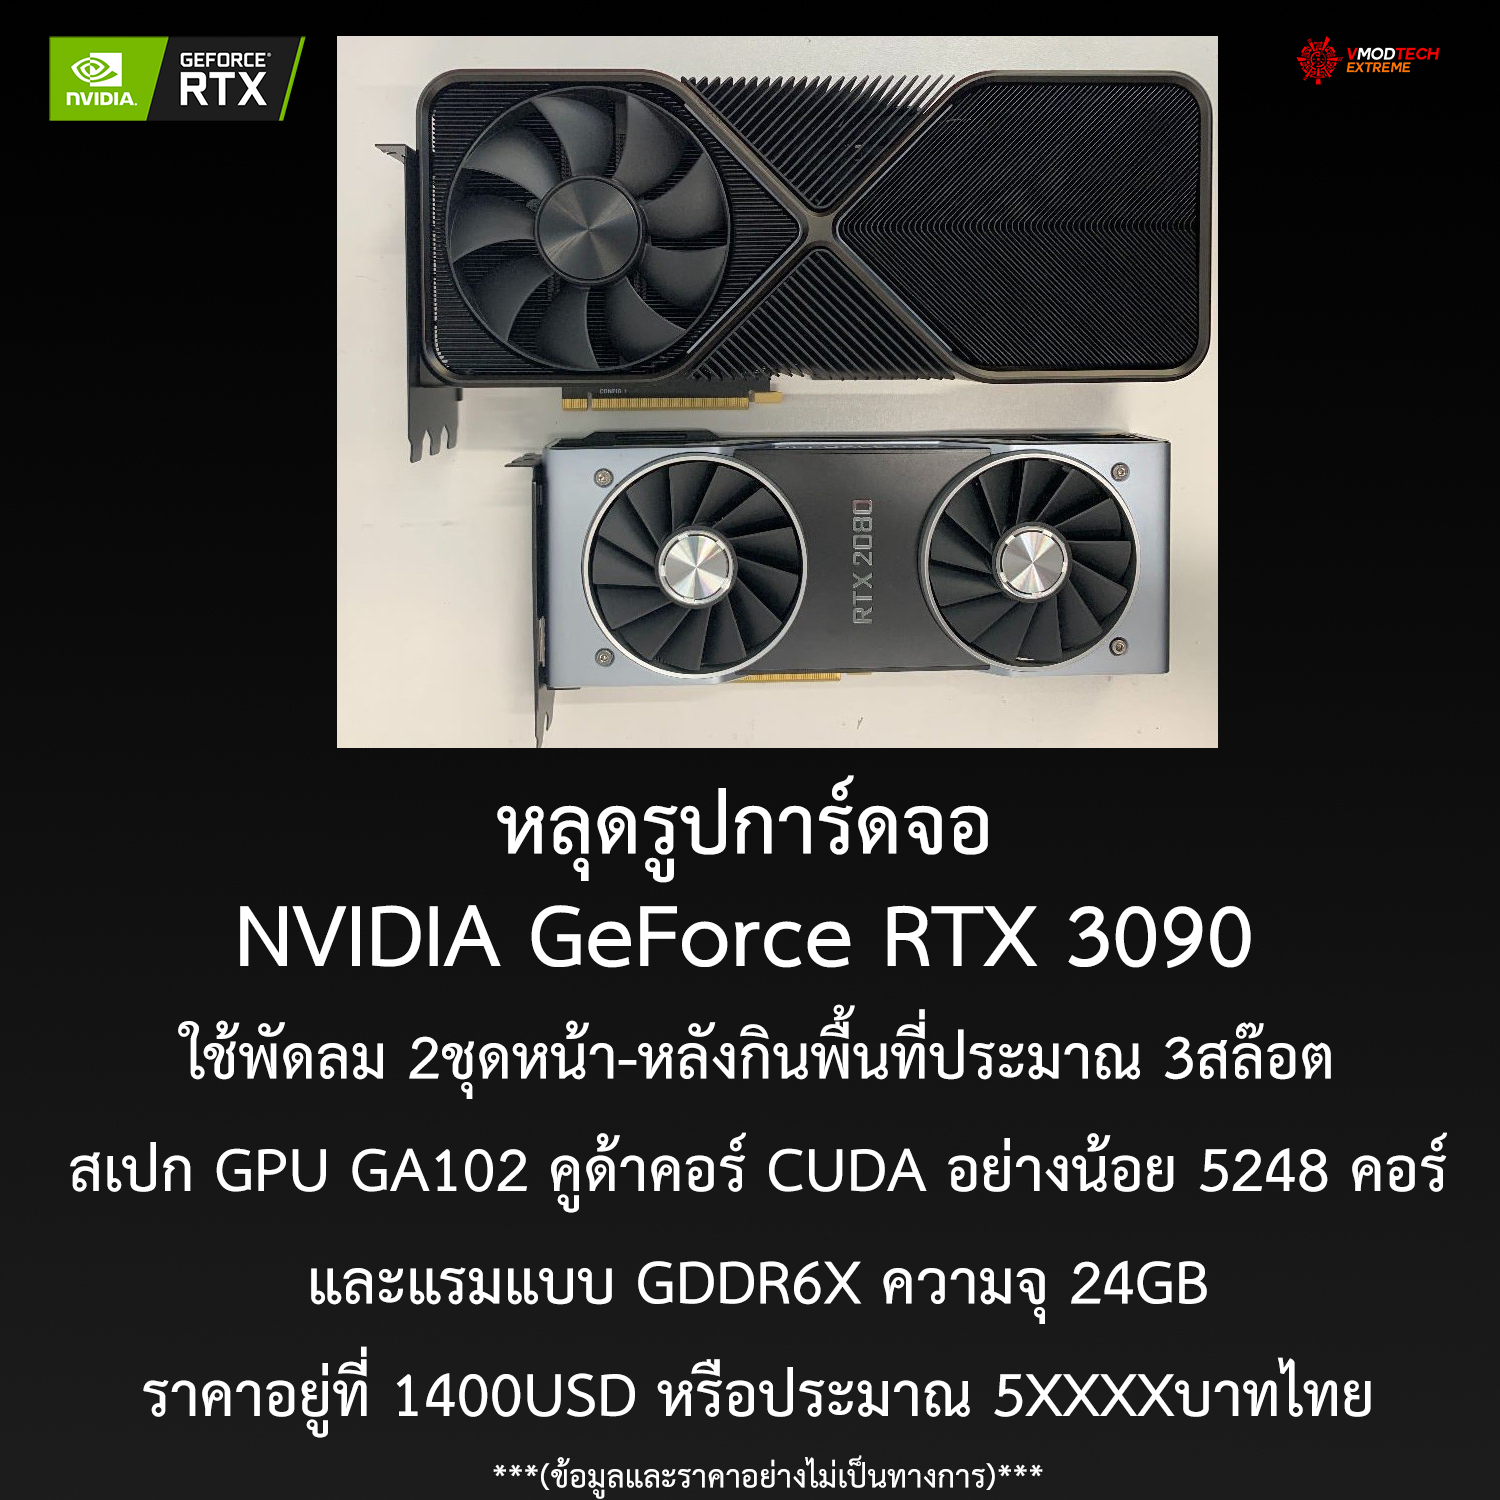 nvidia geforce rtx 3090 picrture รูปหลุดการ์ดจอ NVIDIA GeForce RTX 3090 สถาปัตย์ Ampere รุ่นใหม่ล่าสุดอย่างไม่เป็นทางการ